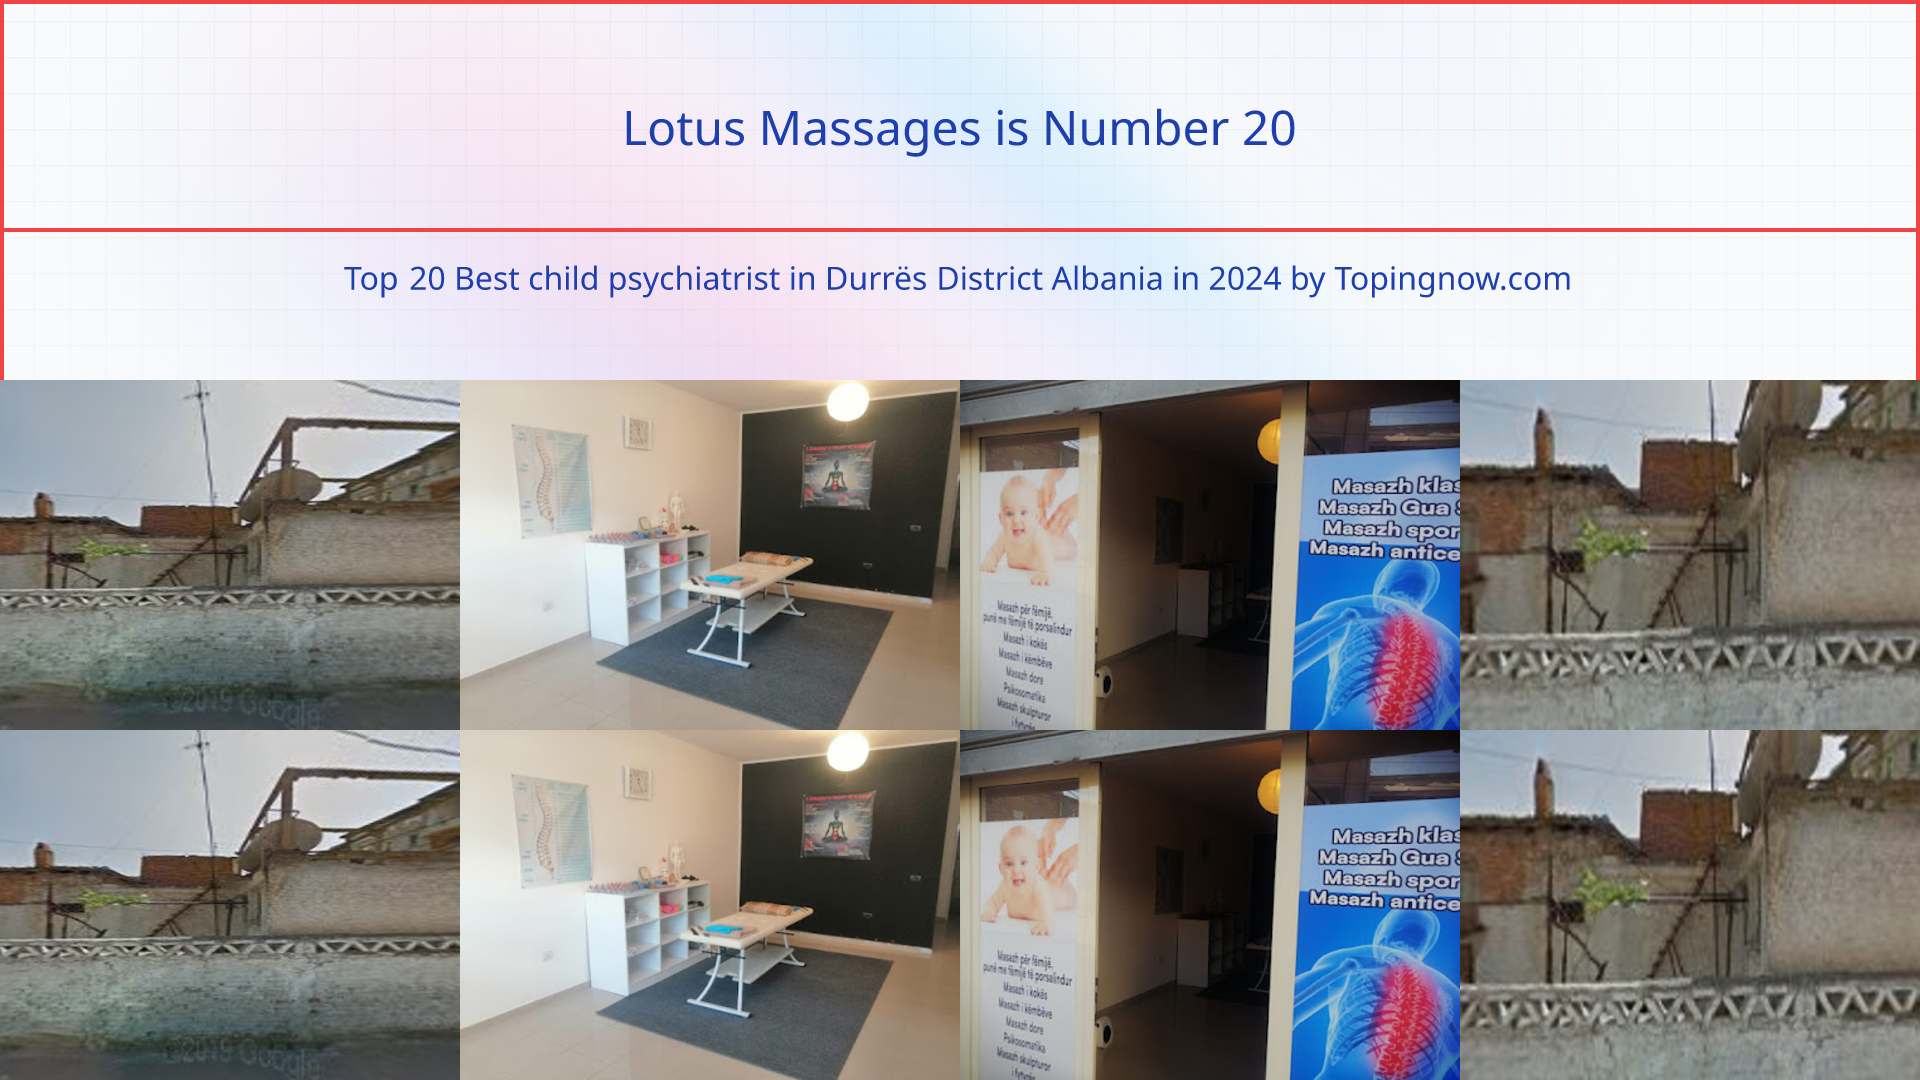 Lotus Massages: Top 20 Best child psychiatrist in Durrës District Albania in 2024